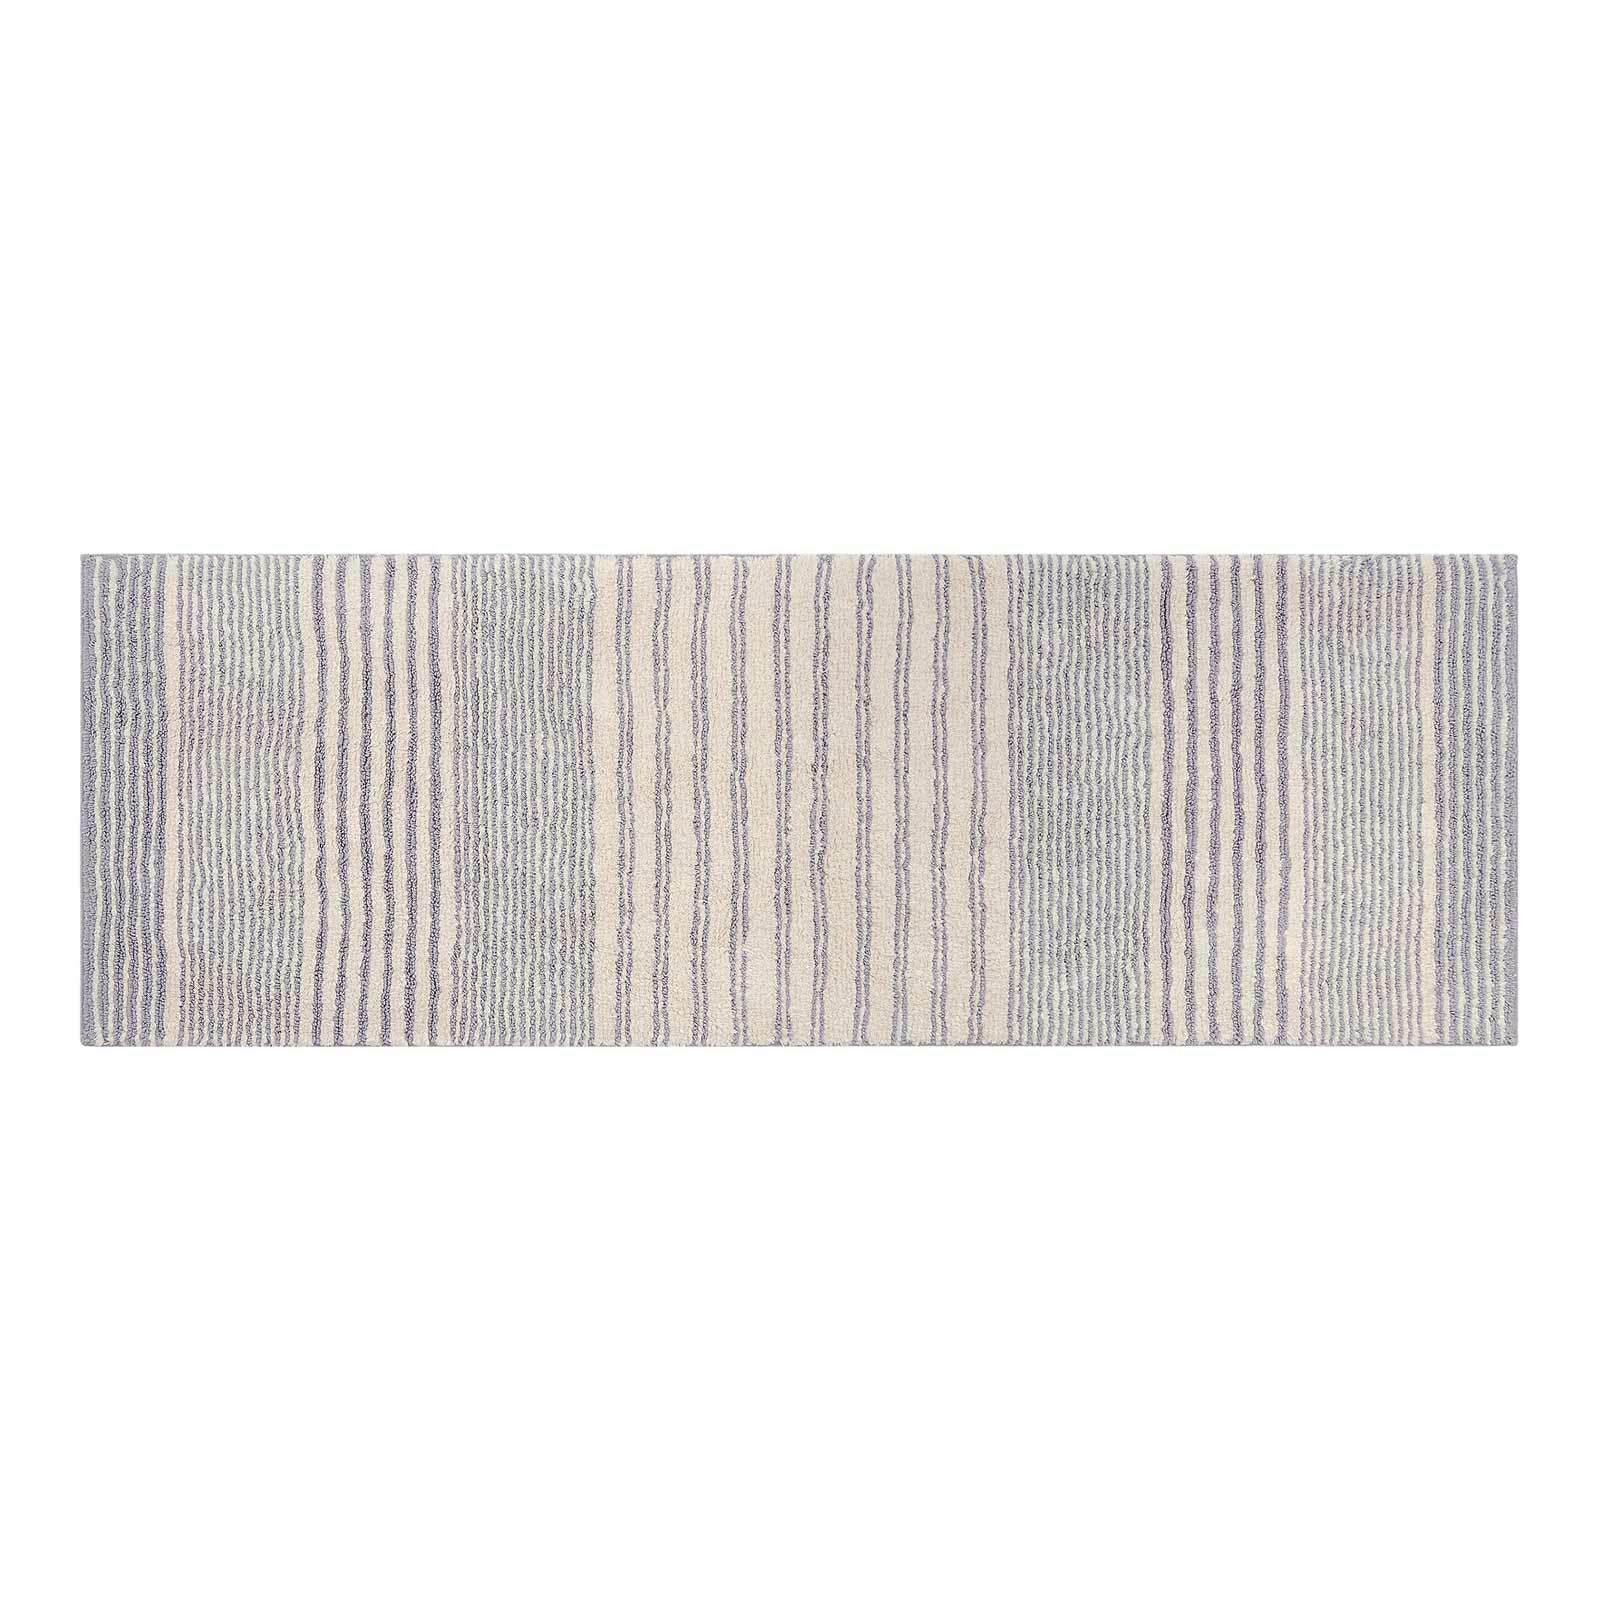 Coastal Nantucket blue and white stripe bath mat in size 24x70